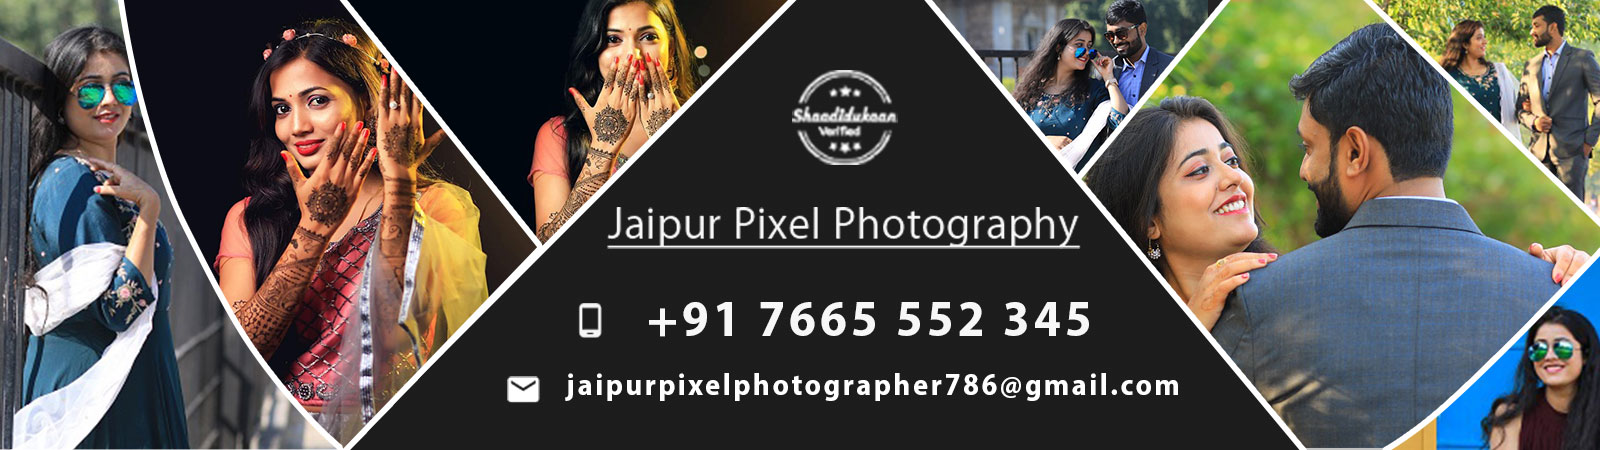 jaipur-pixel-photography